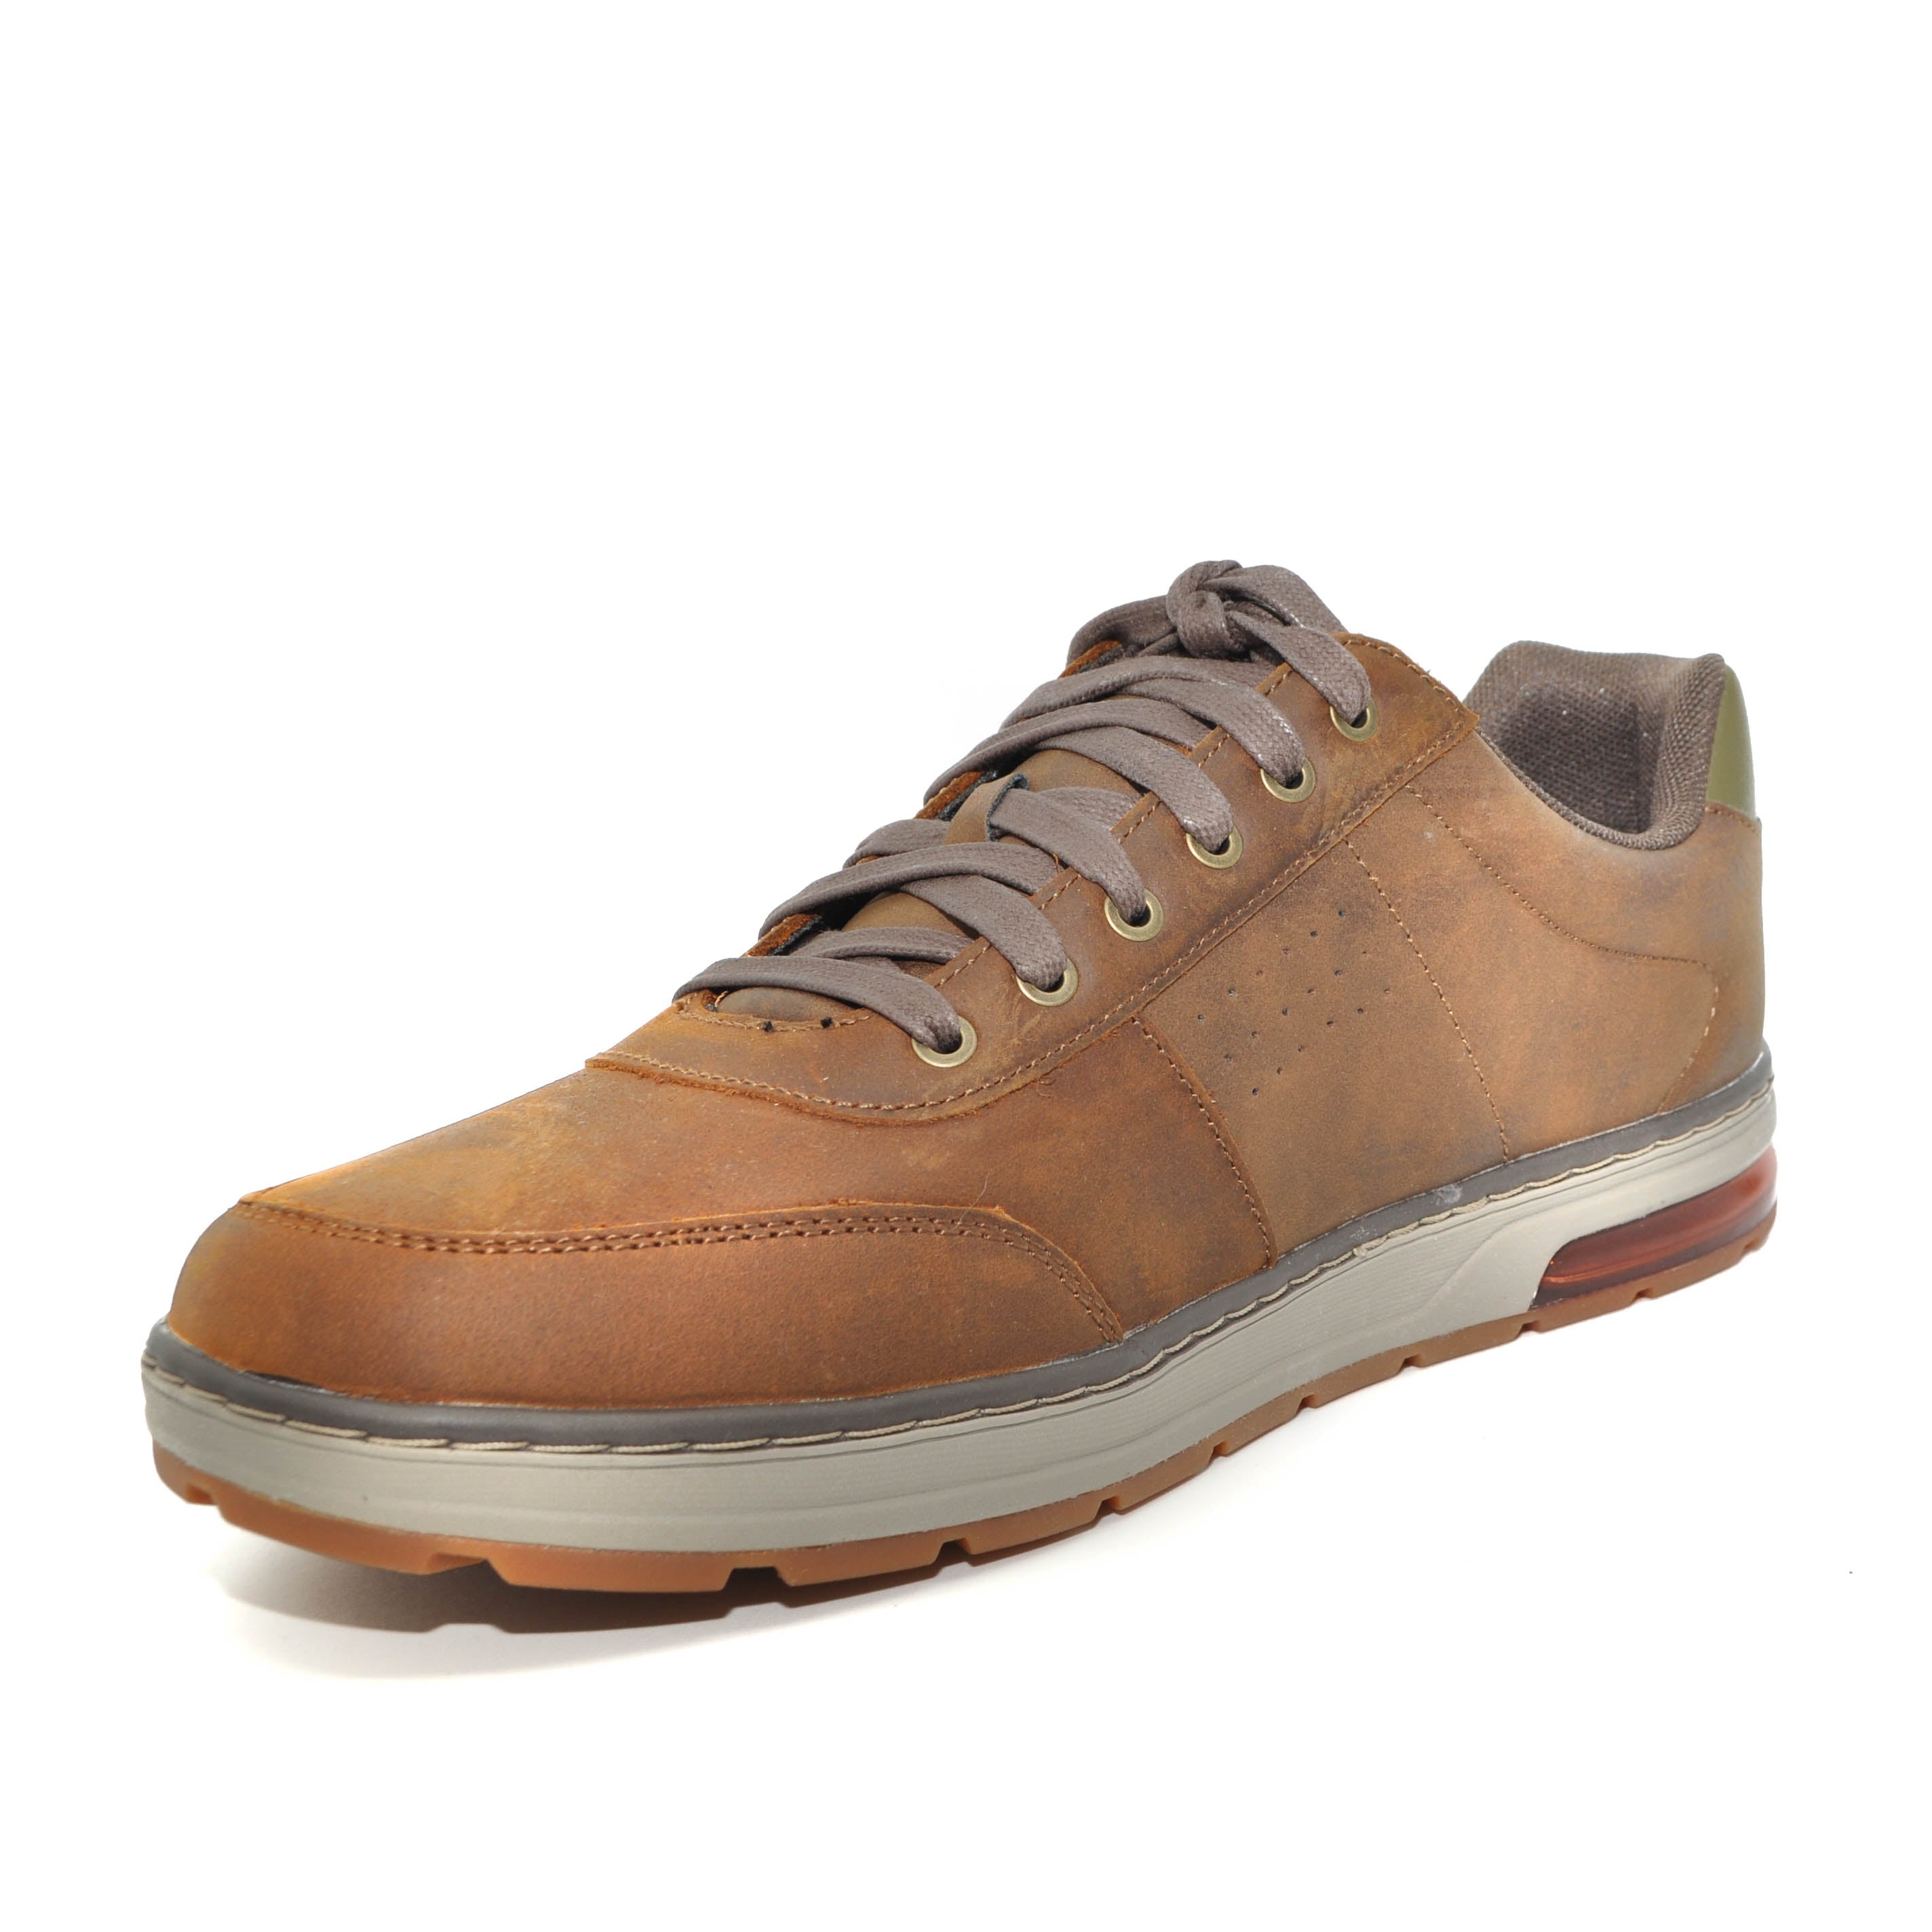 Skechers brown shoes for men